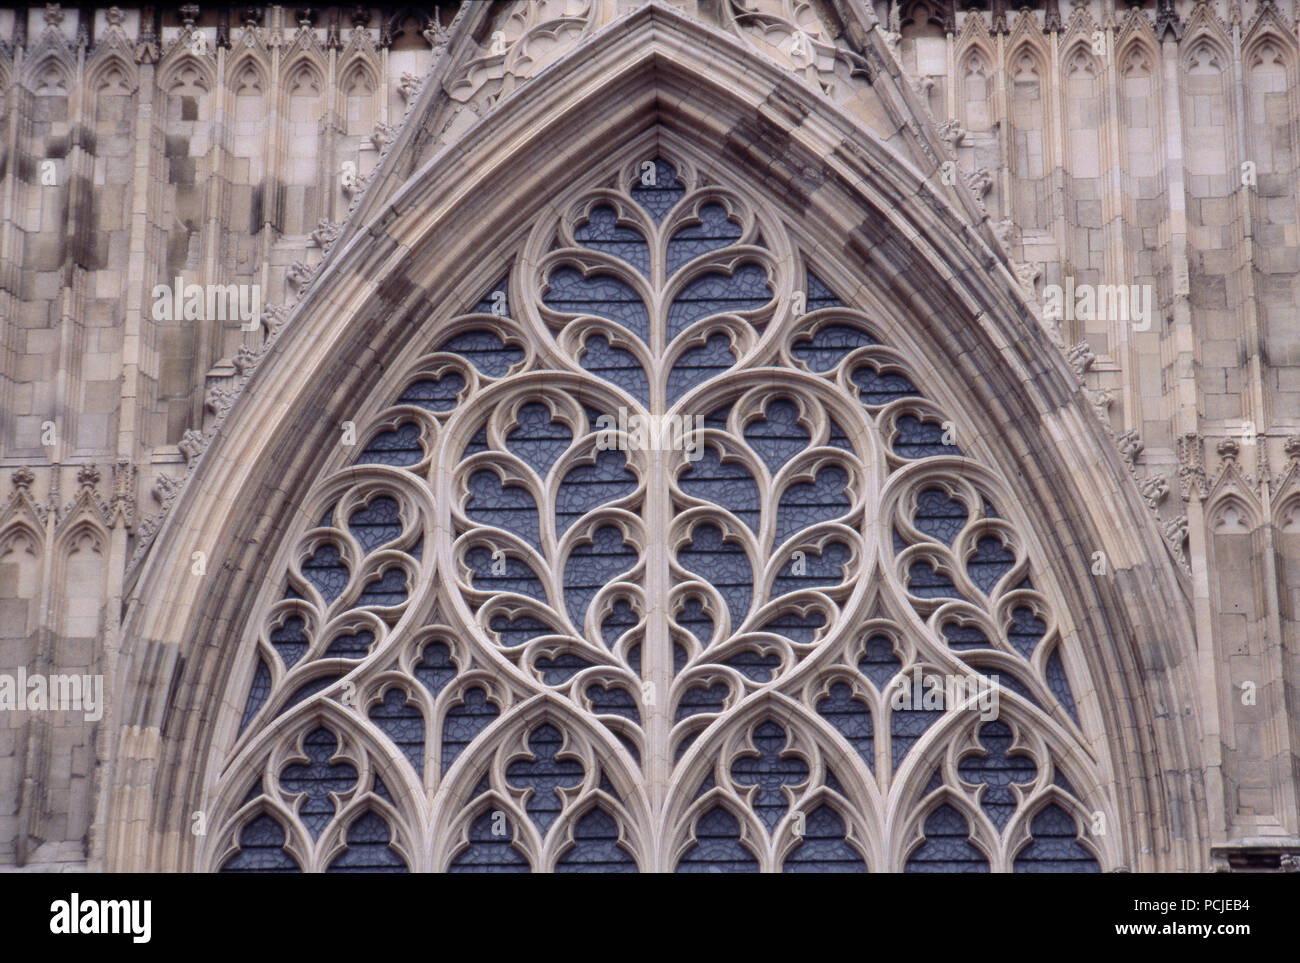 Details Kathedrale von York, York, England. Foto Stockfoto